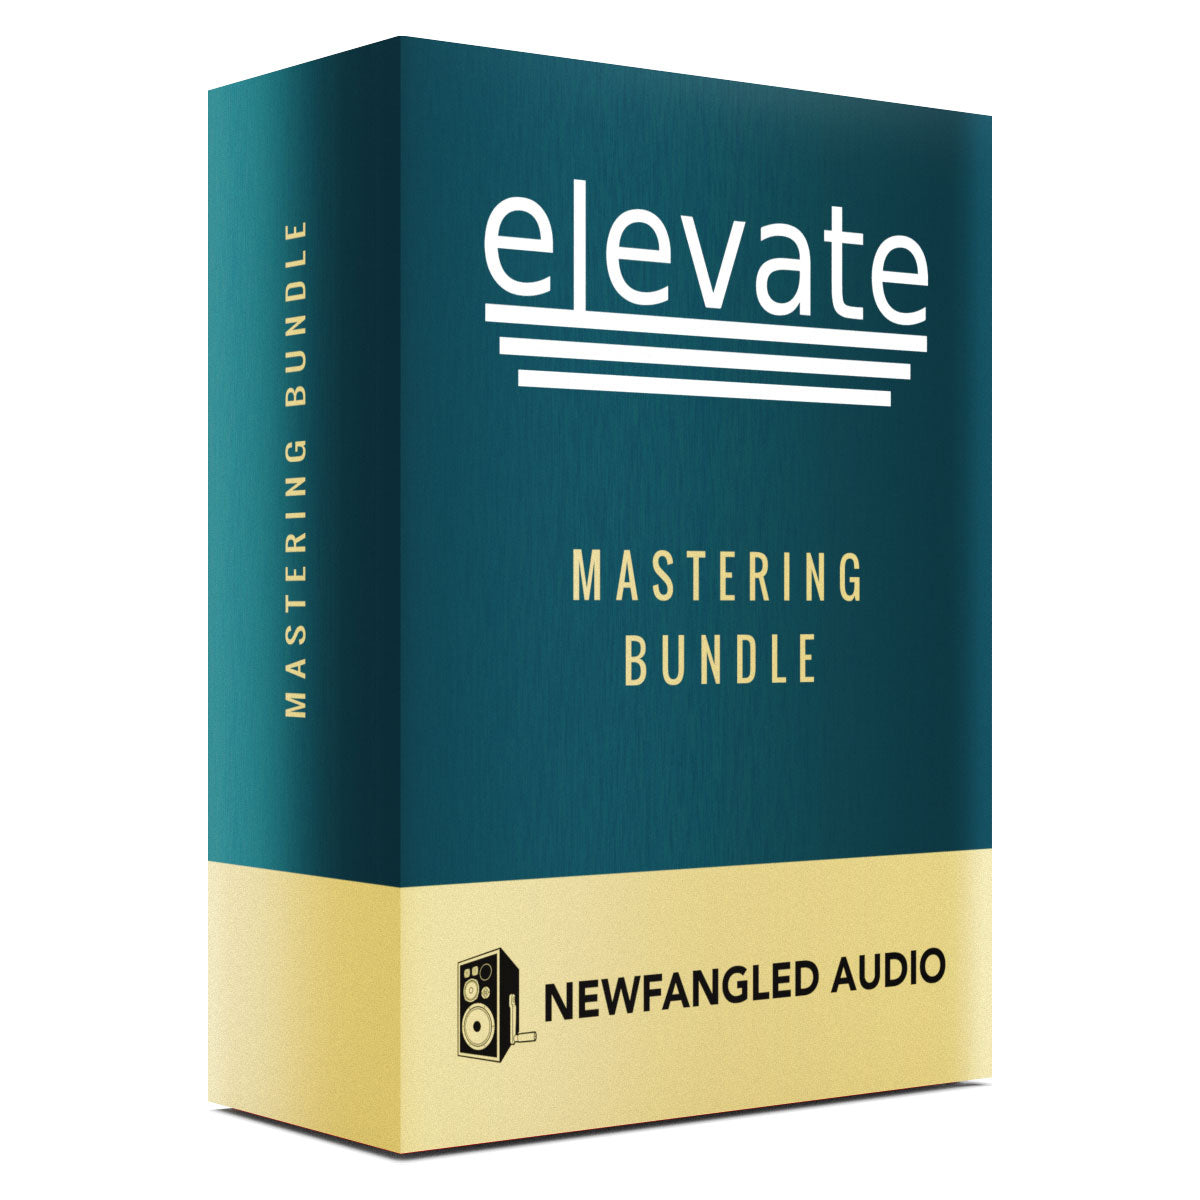 Newfangled Elevate Mastering Bundle (Serial Nr + Download)